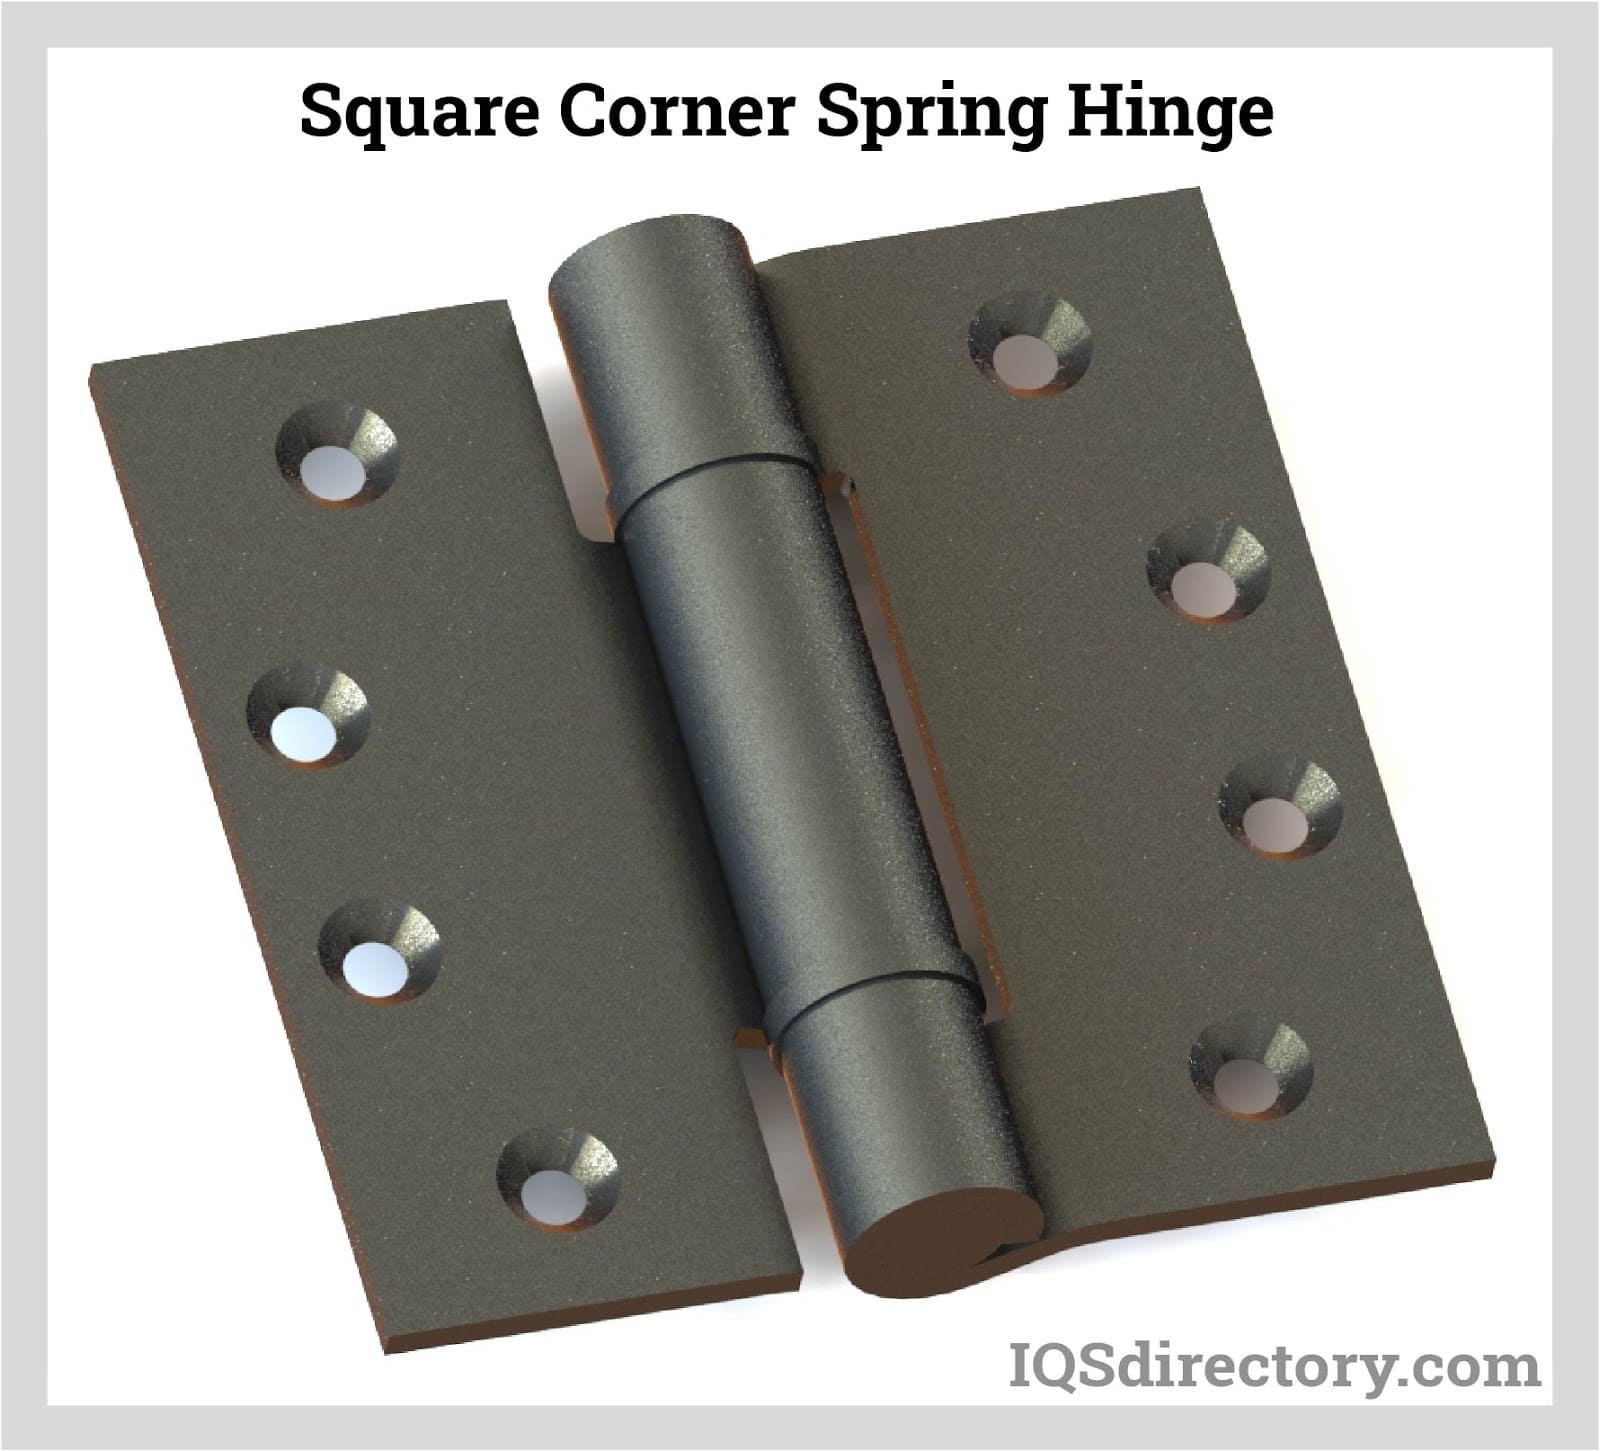 Square Corner Spring Hinge